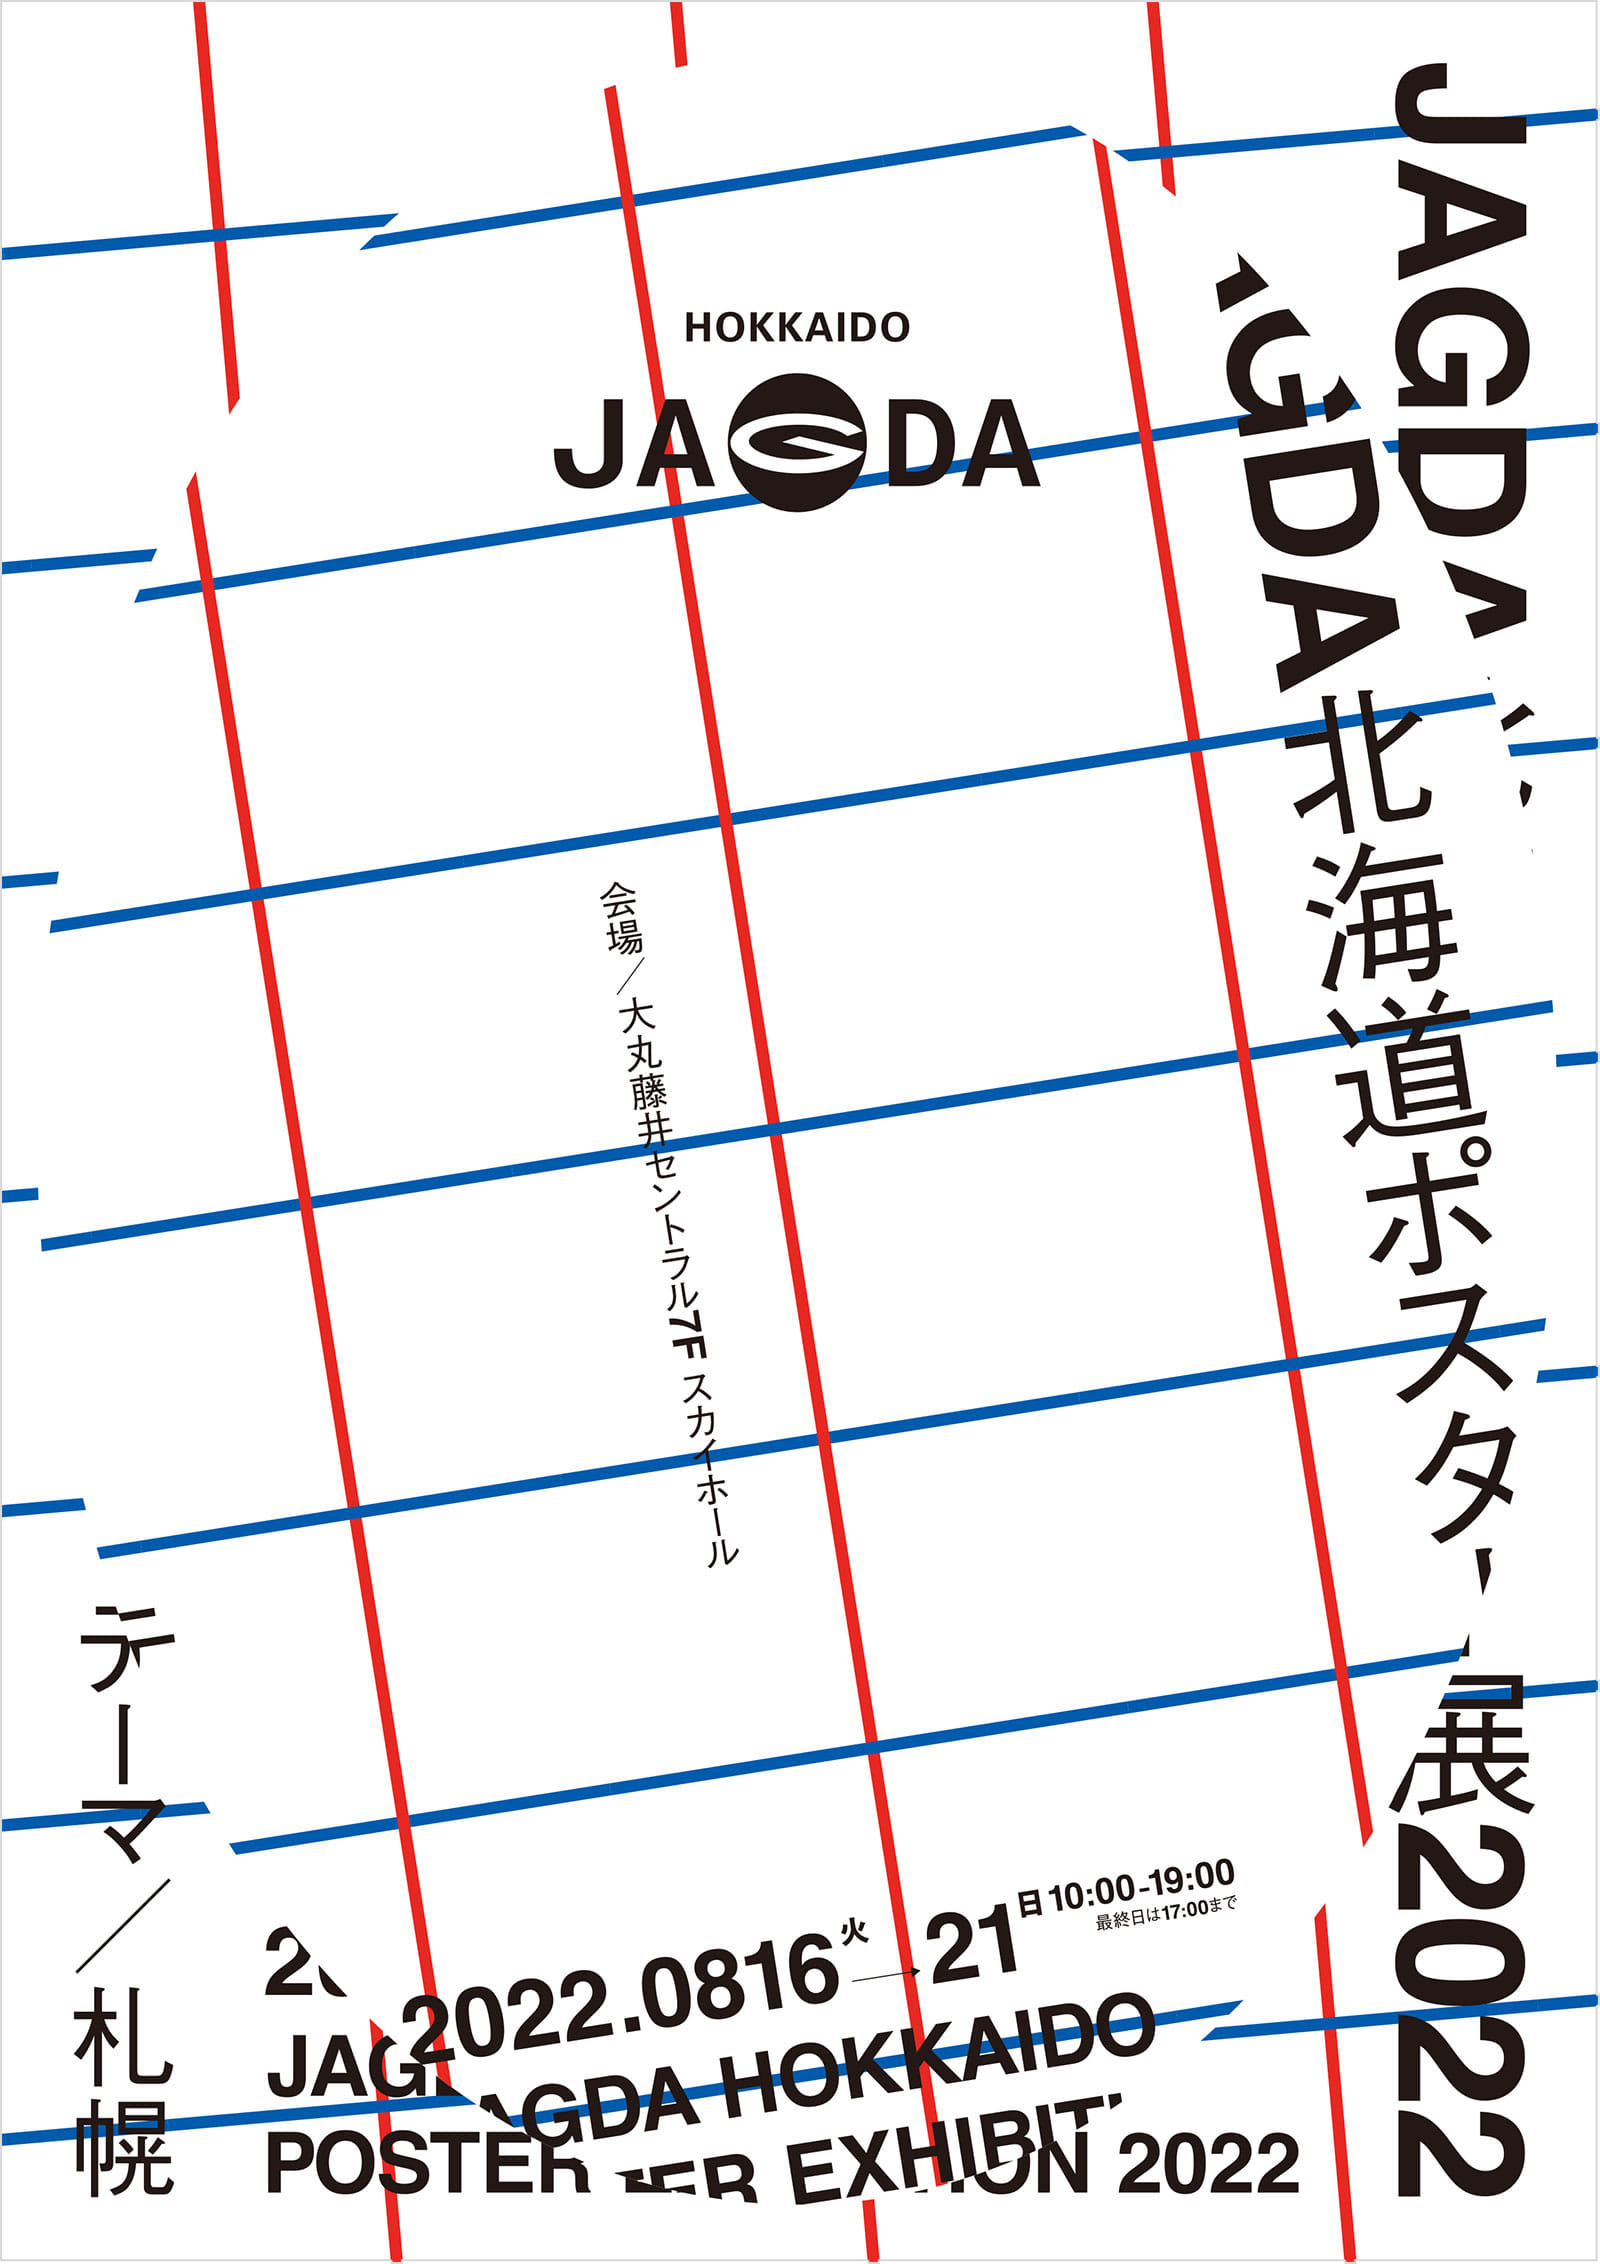 JAGDA北海道海报展 JAGDA HOKKAIDO POSTER EXHIBITION